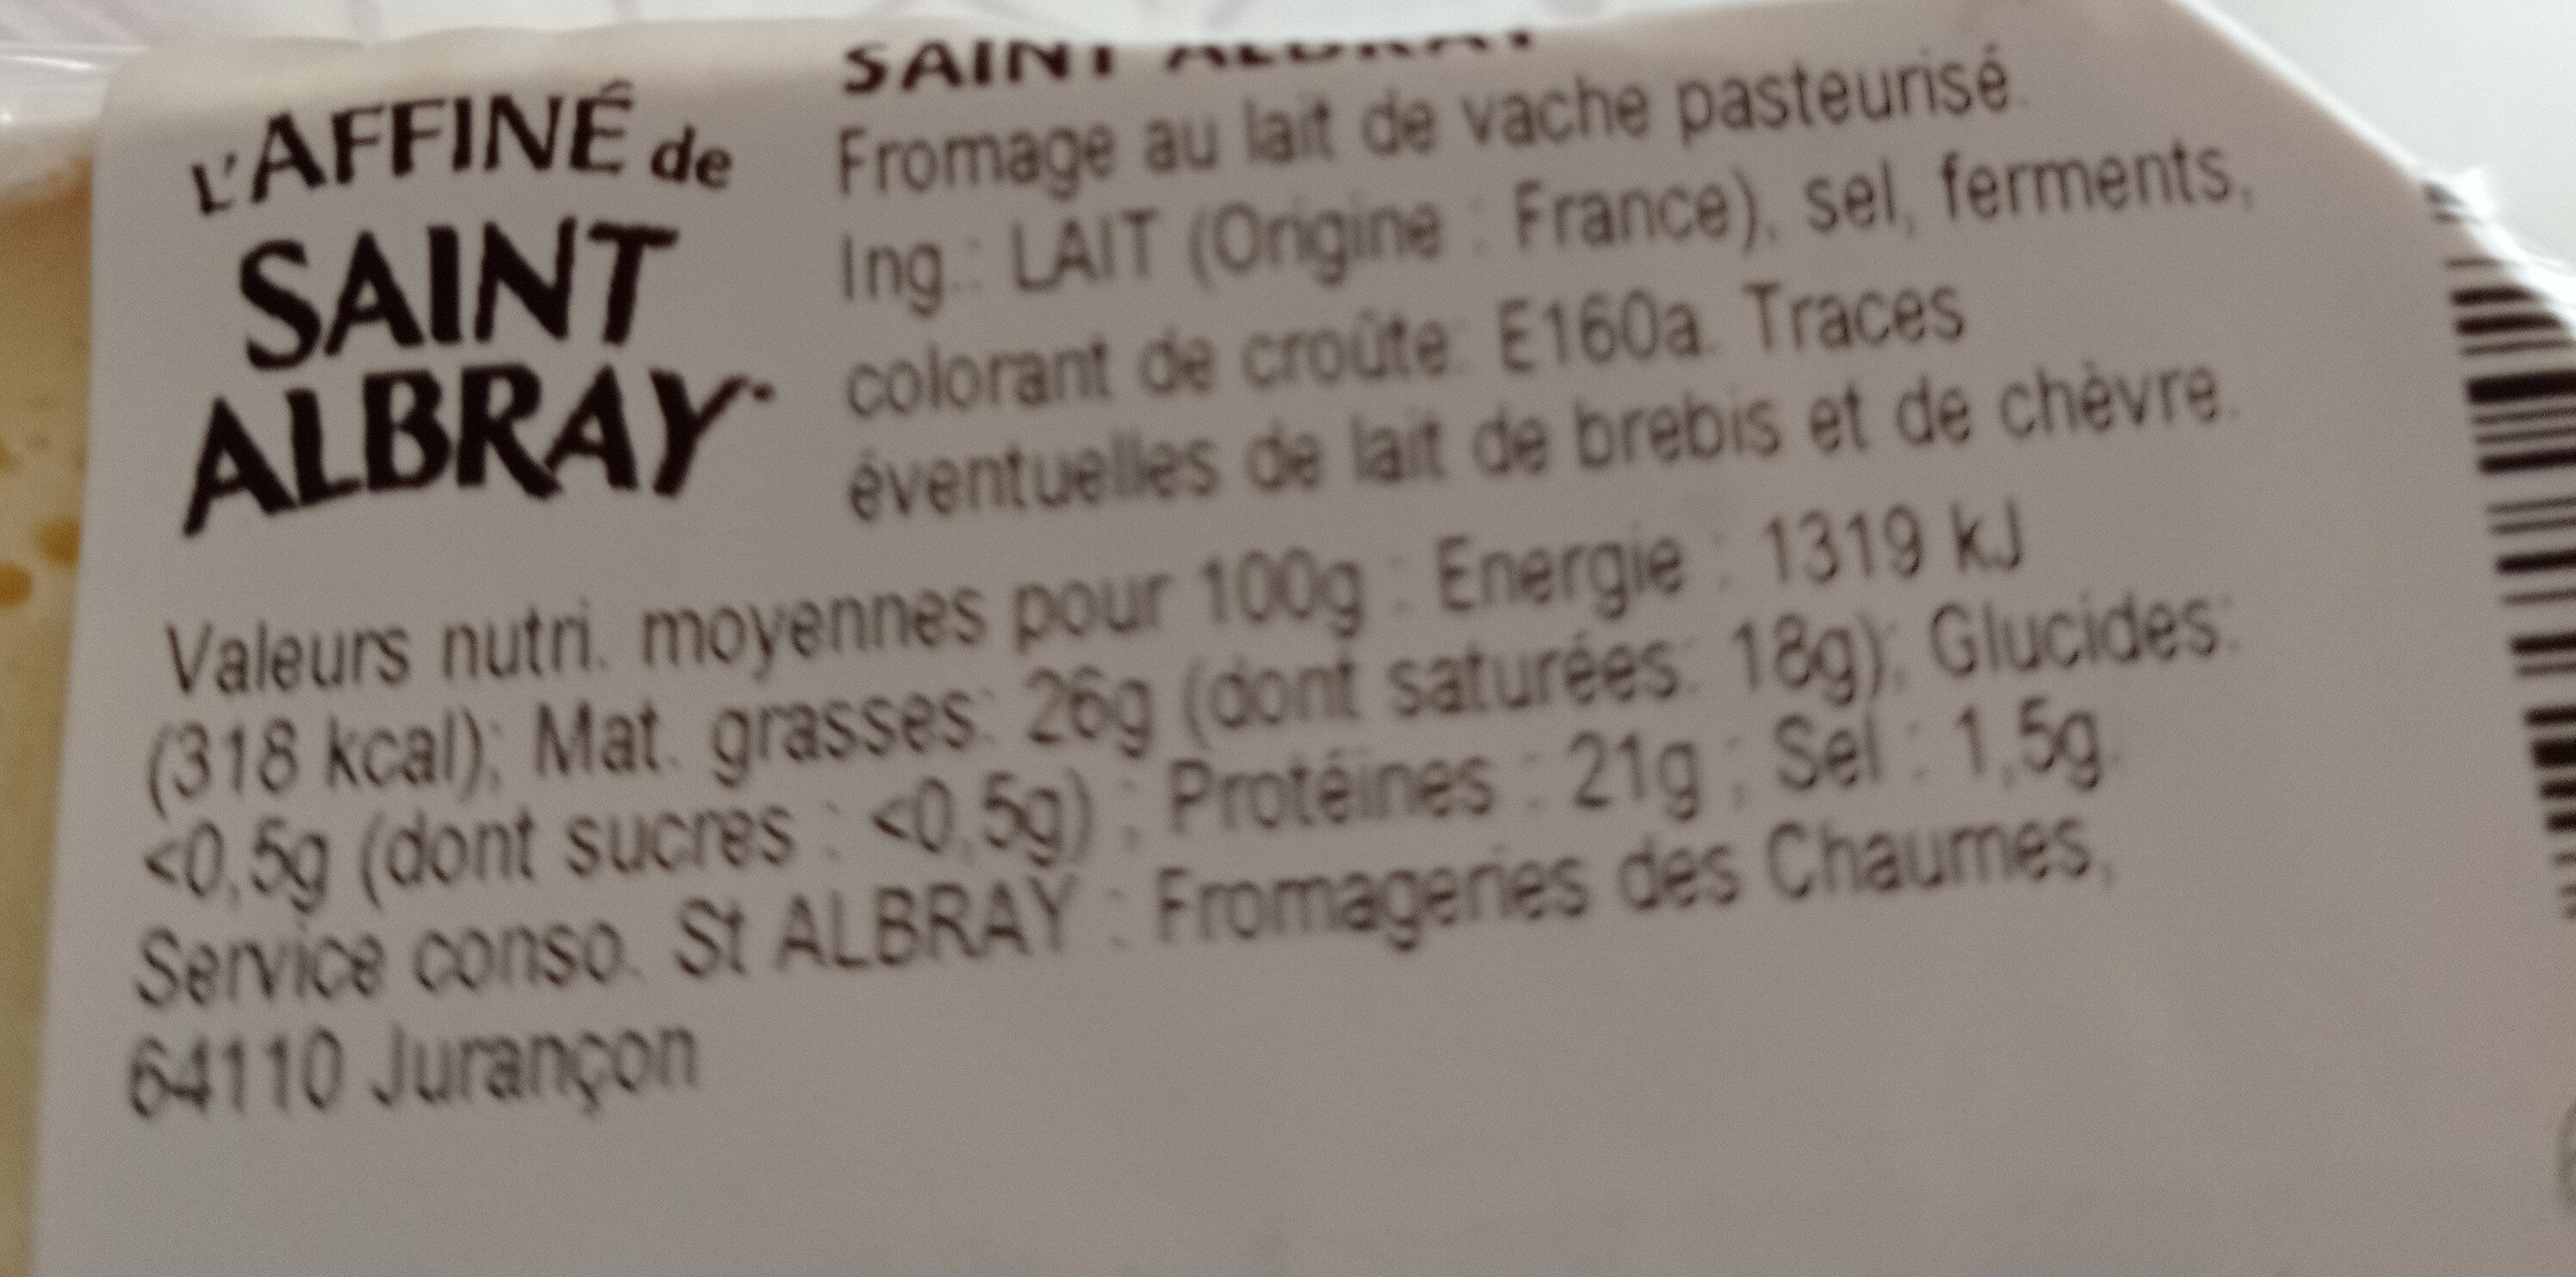 saint Albray - Tableau nutritionnel